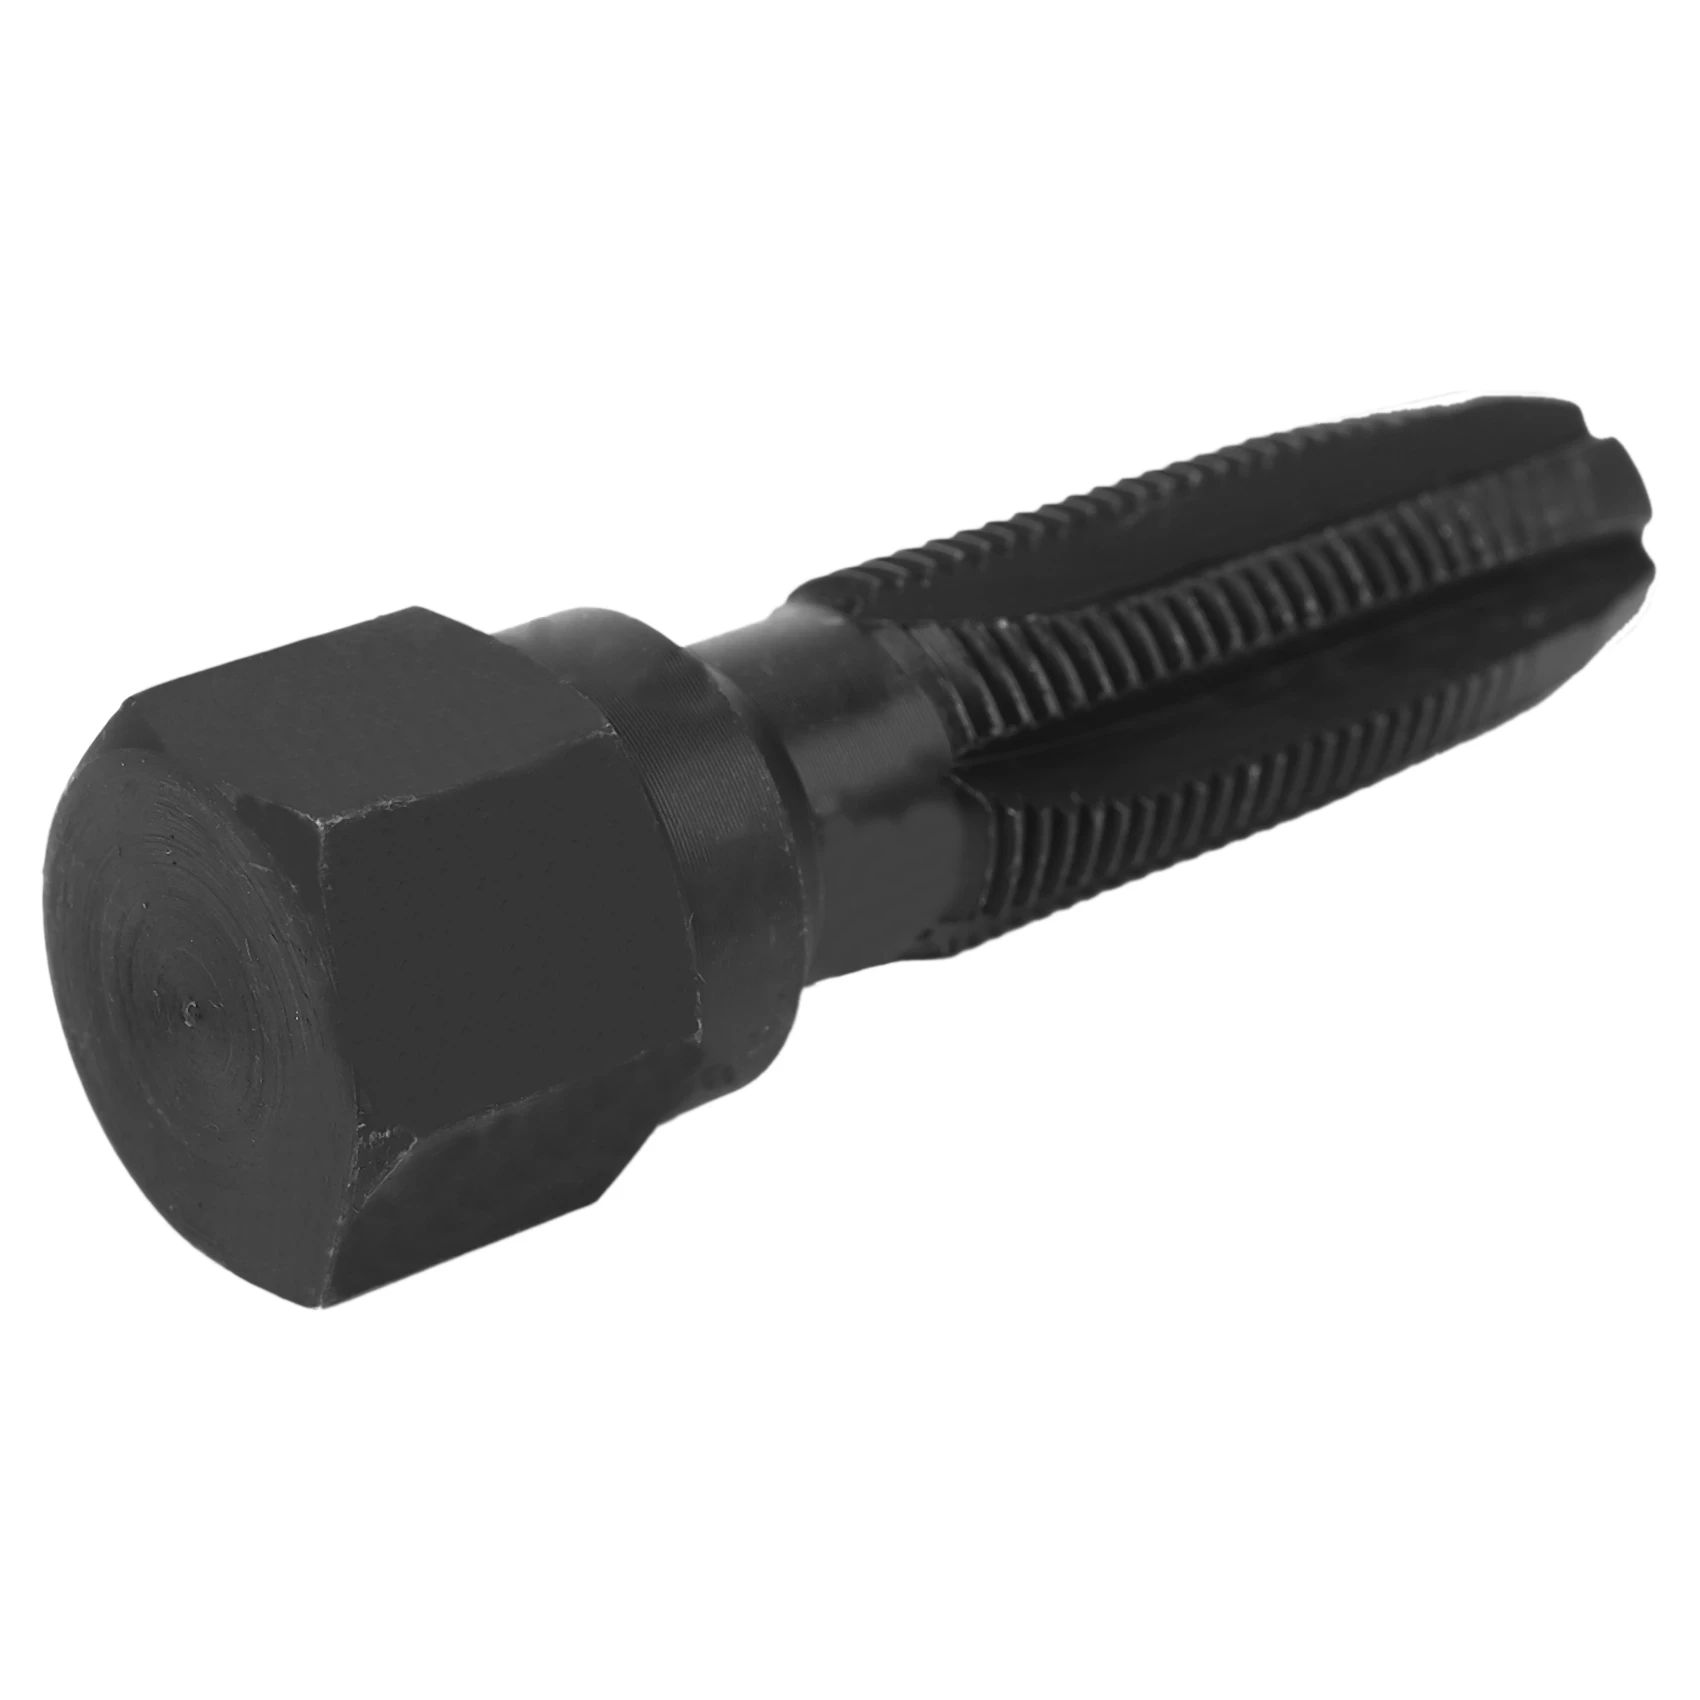 

14mm Spark Plug Thread Repair Kit Rethread Tool Kit Reamer Tap M14x1.25